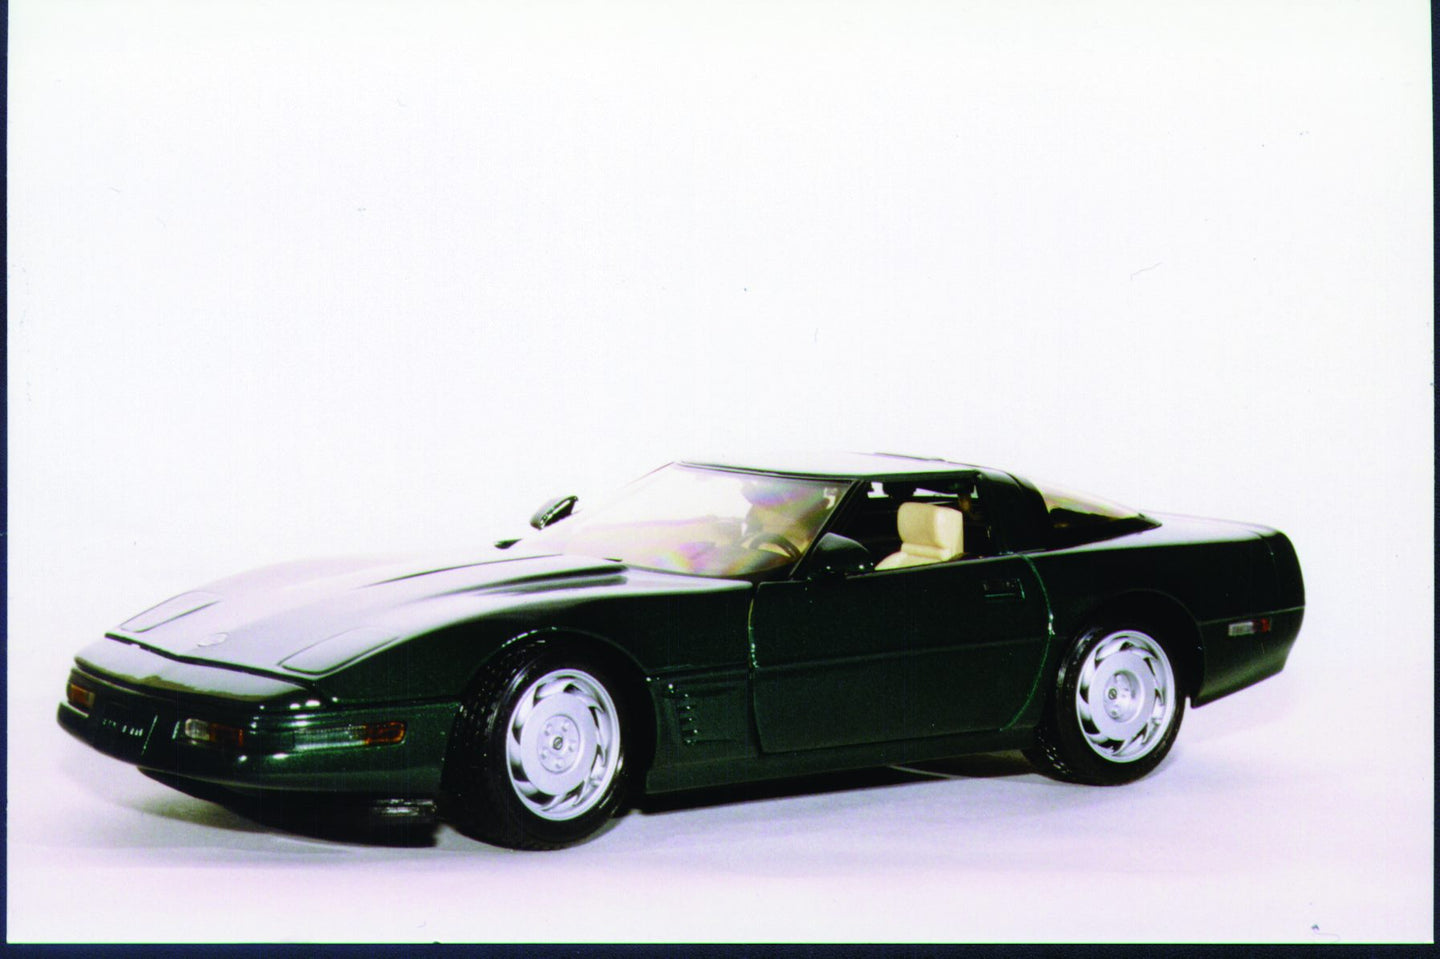 1:18 Maisto Chevy Corvette '96 Coupe